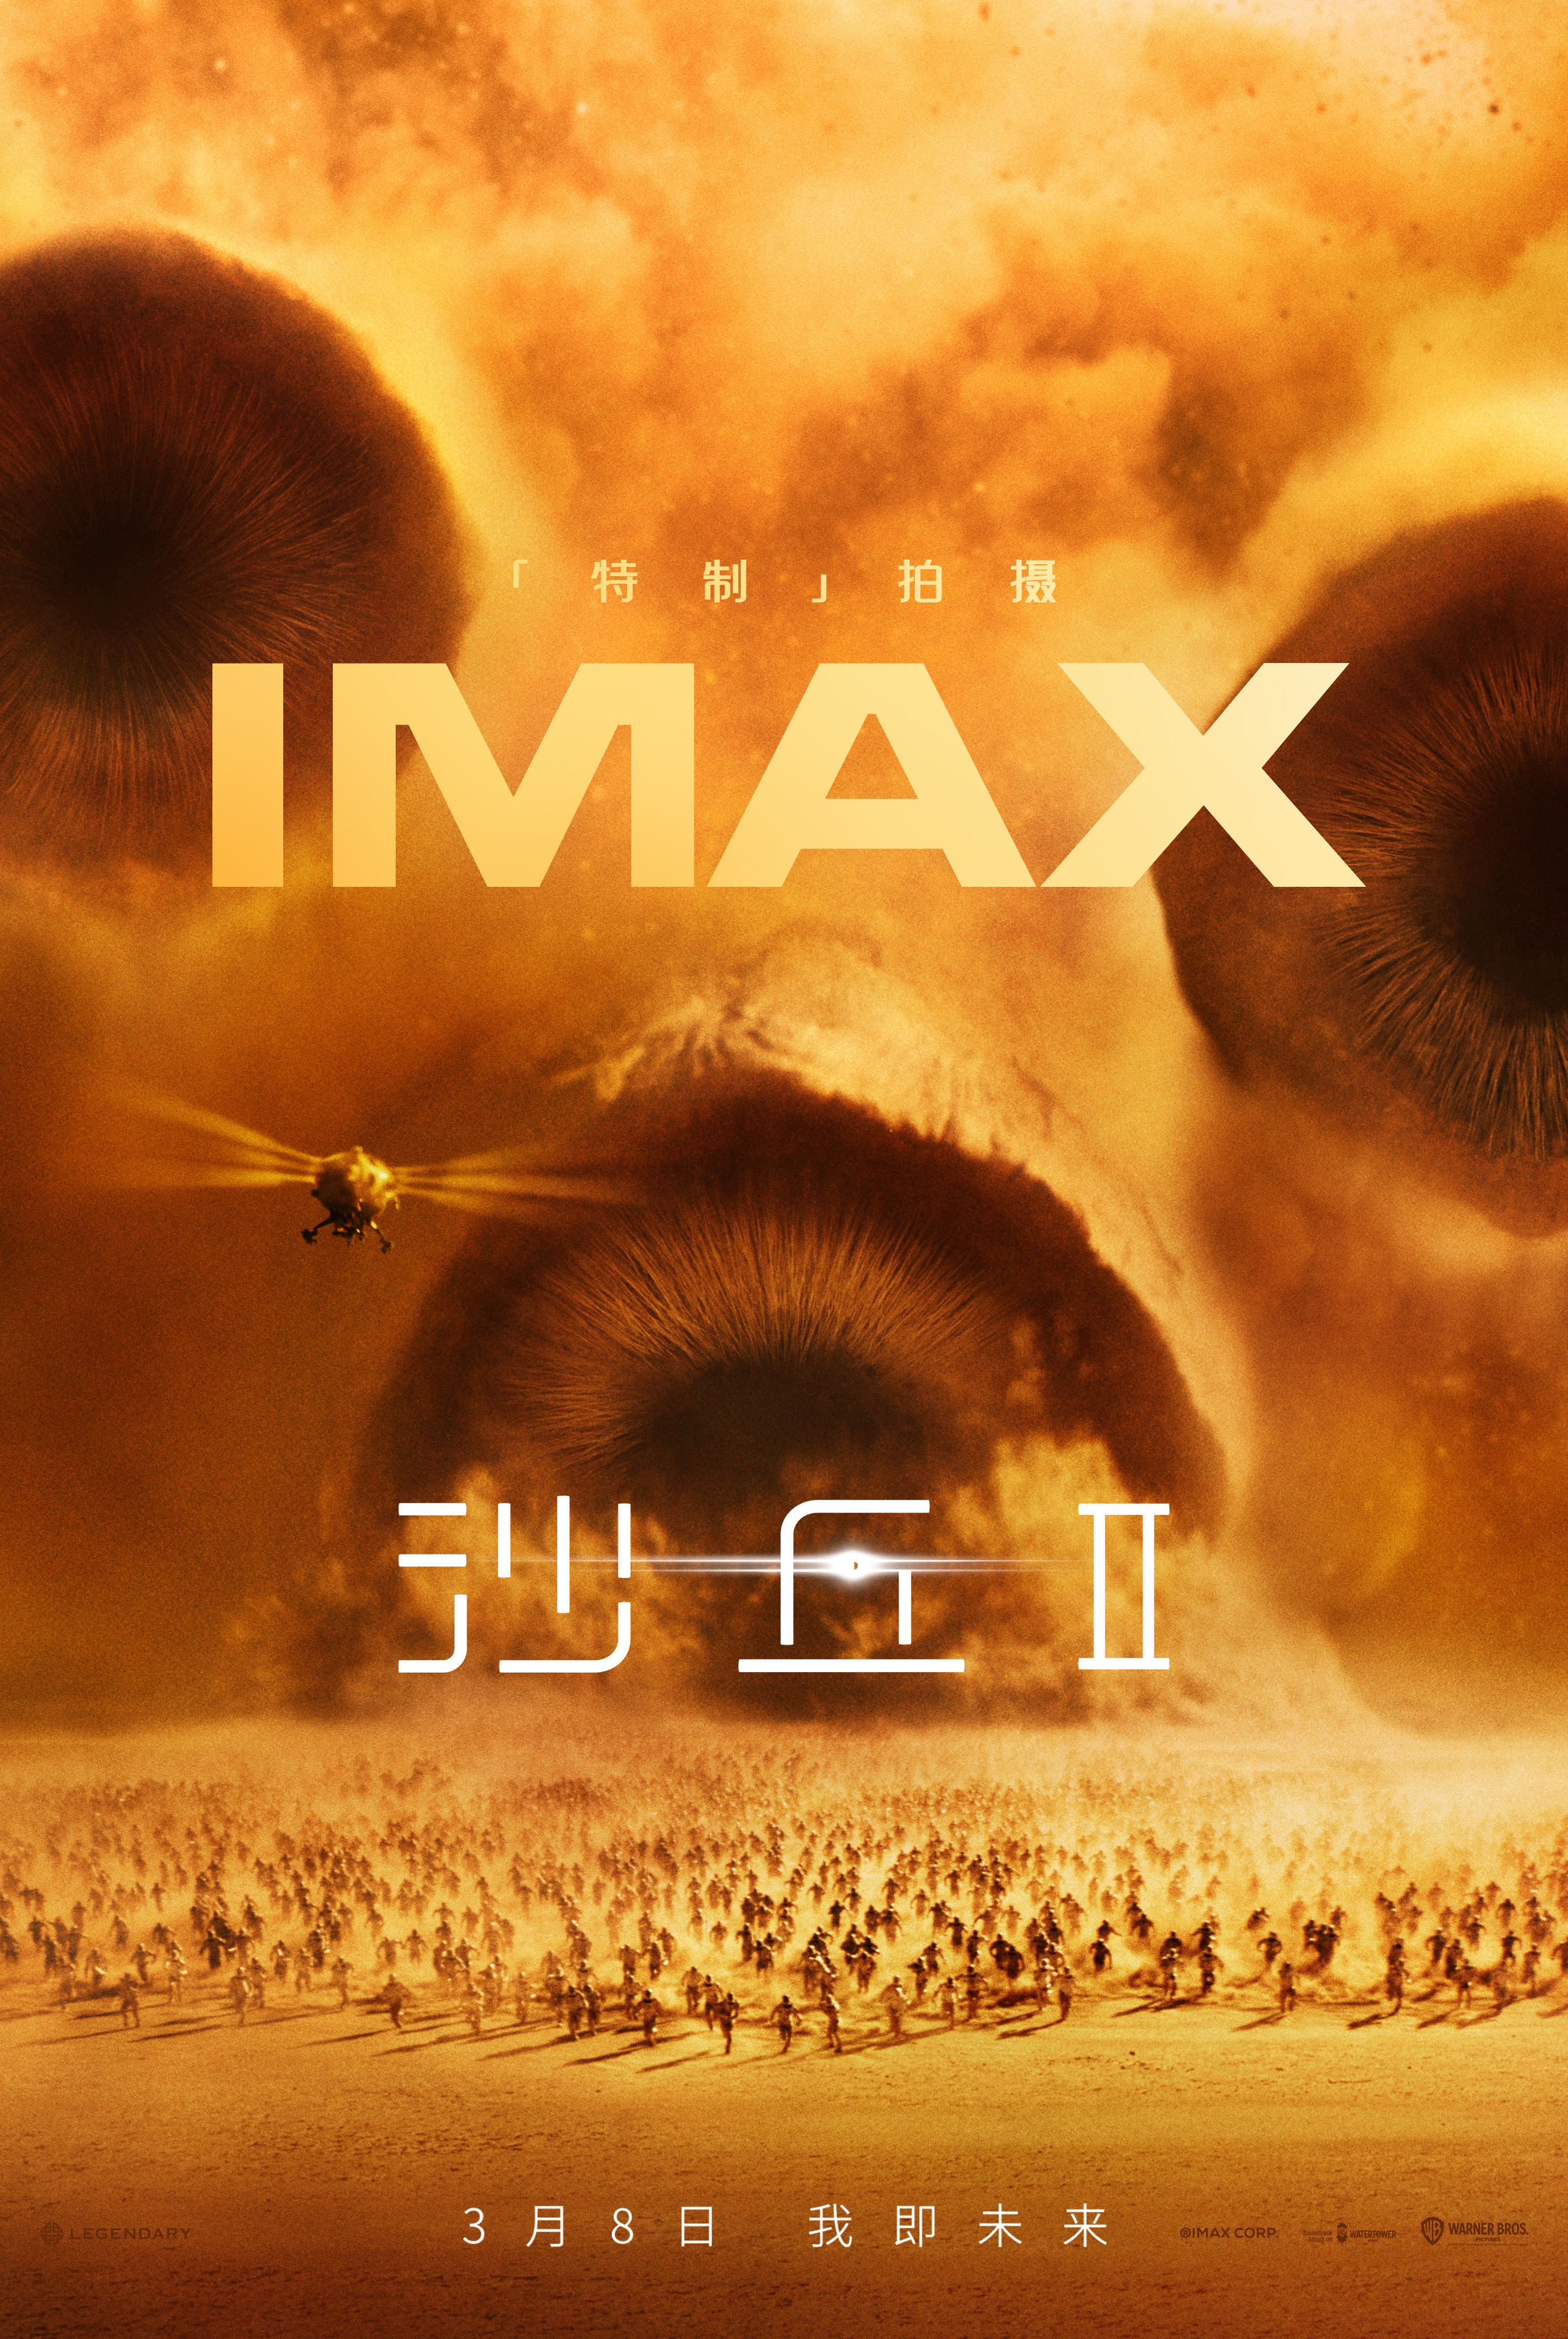 IMAX发布《沙丘2》幕后特辑 全片采用IMAX特制拍摄将幻想变为现实